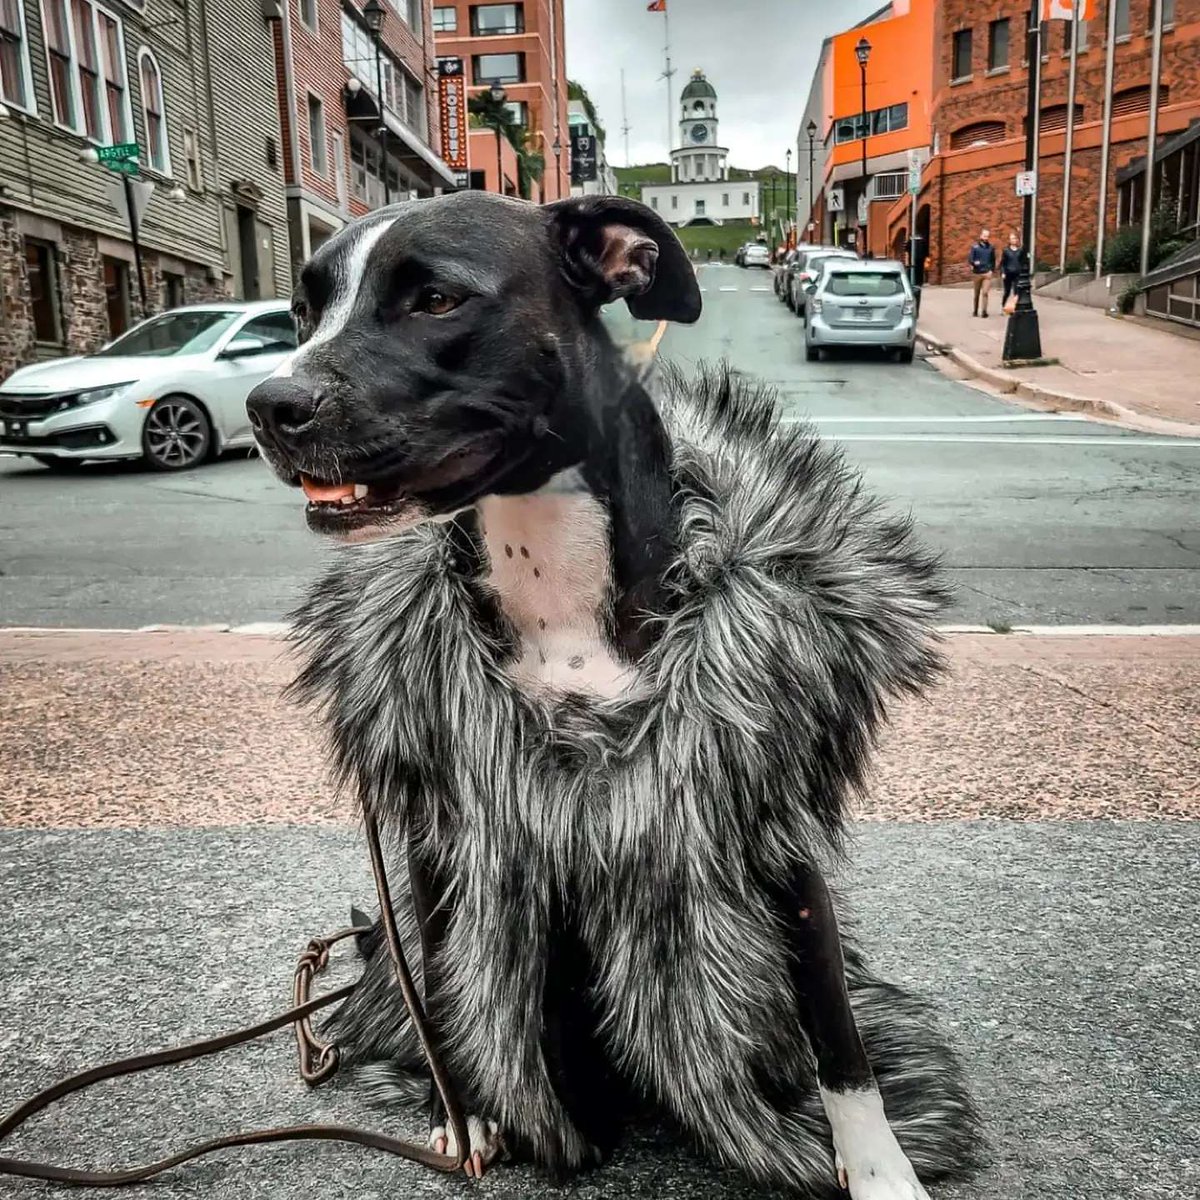 Halifax 🐾's | From @mylittlepibble • • • • • • Halifax, Nova Scotia ⁣ How would you caption this photo? 😏⁣ ⁣ ⁣ ⁣ ⁣ ⁣ ⁣ ⁣ ⁣ ⁣ ⁣ ⁣ ⁣ ⁣ ⁣ ⁣ ⁣ ⁣ #devilwearsprada #costume #dogmodel #hfxdogs #halifaxdogs #hfxdogsquad #dogsofcanada #canadiandogs…